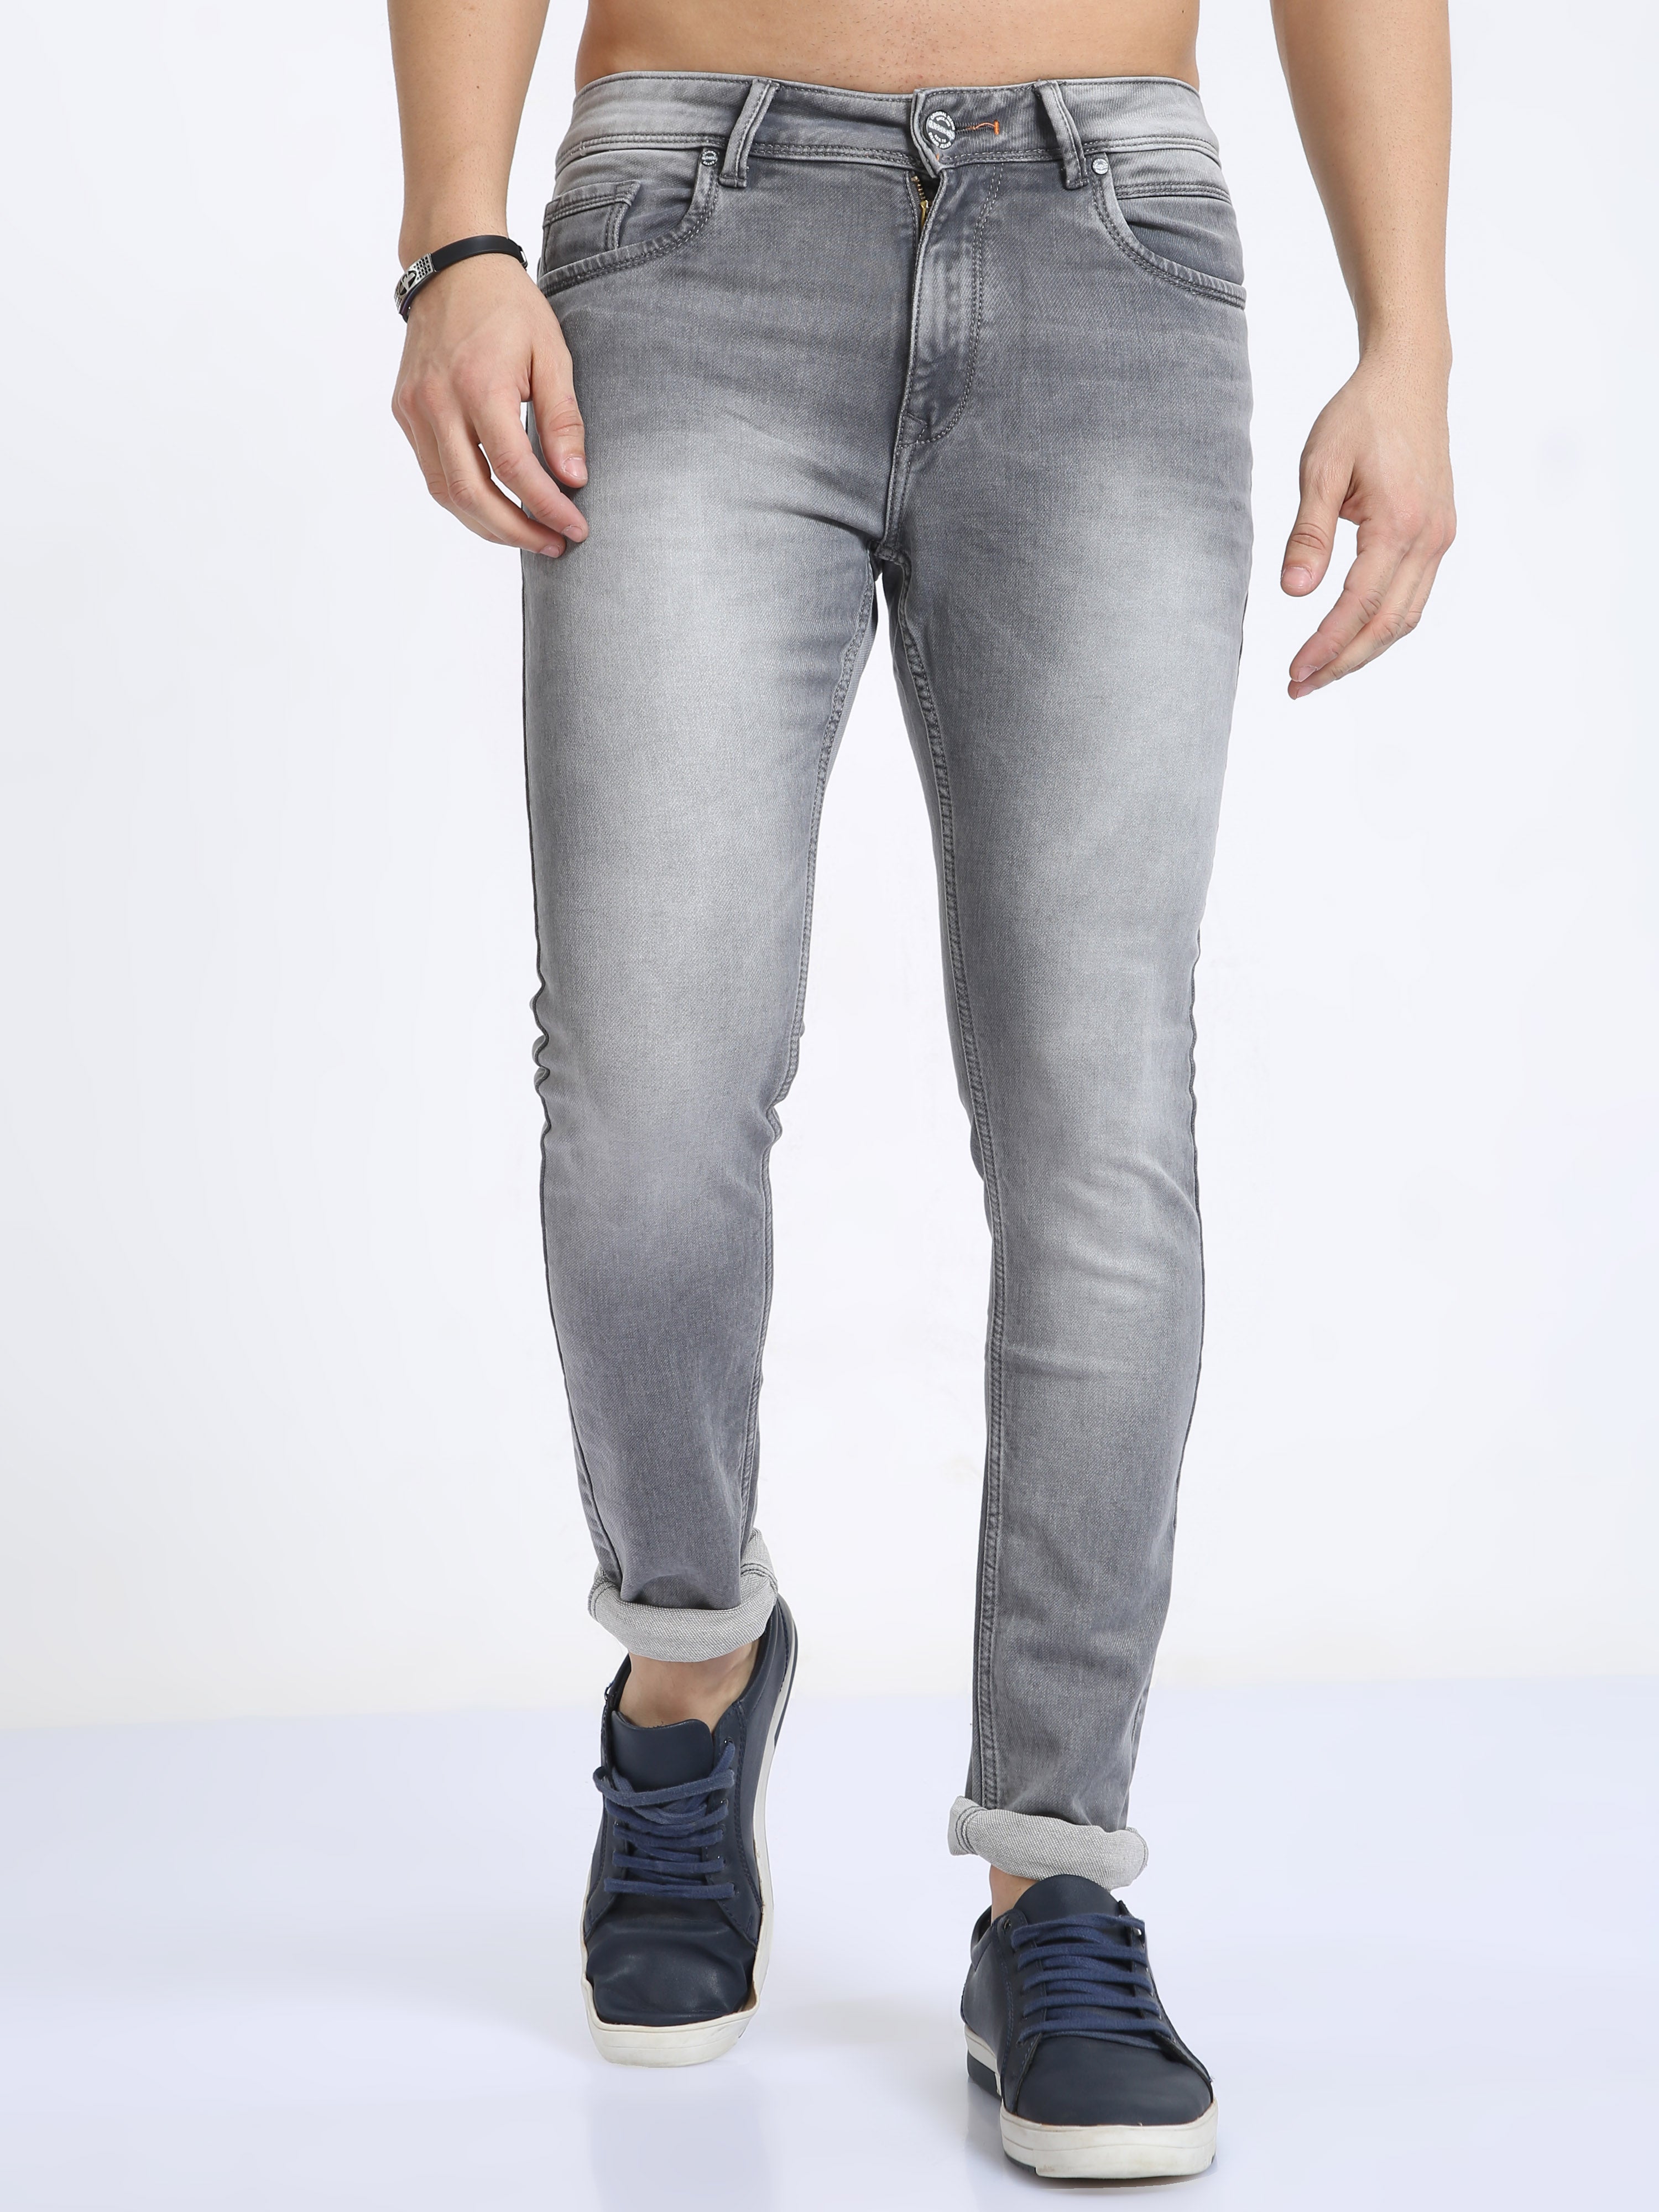 Pewter Grey Men Skinny-Fit Jeans